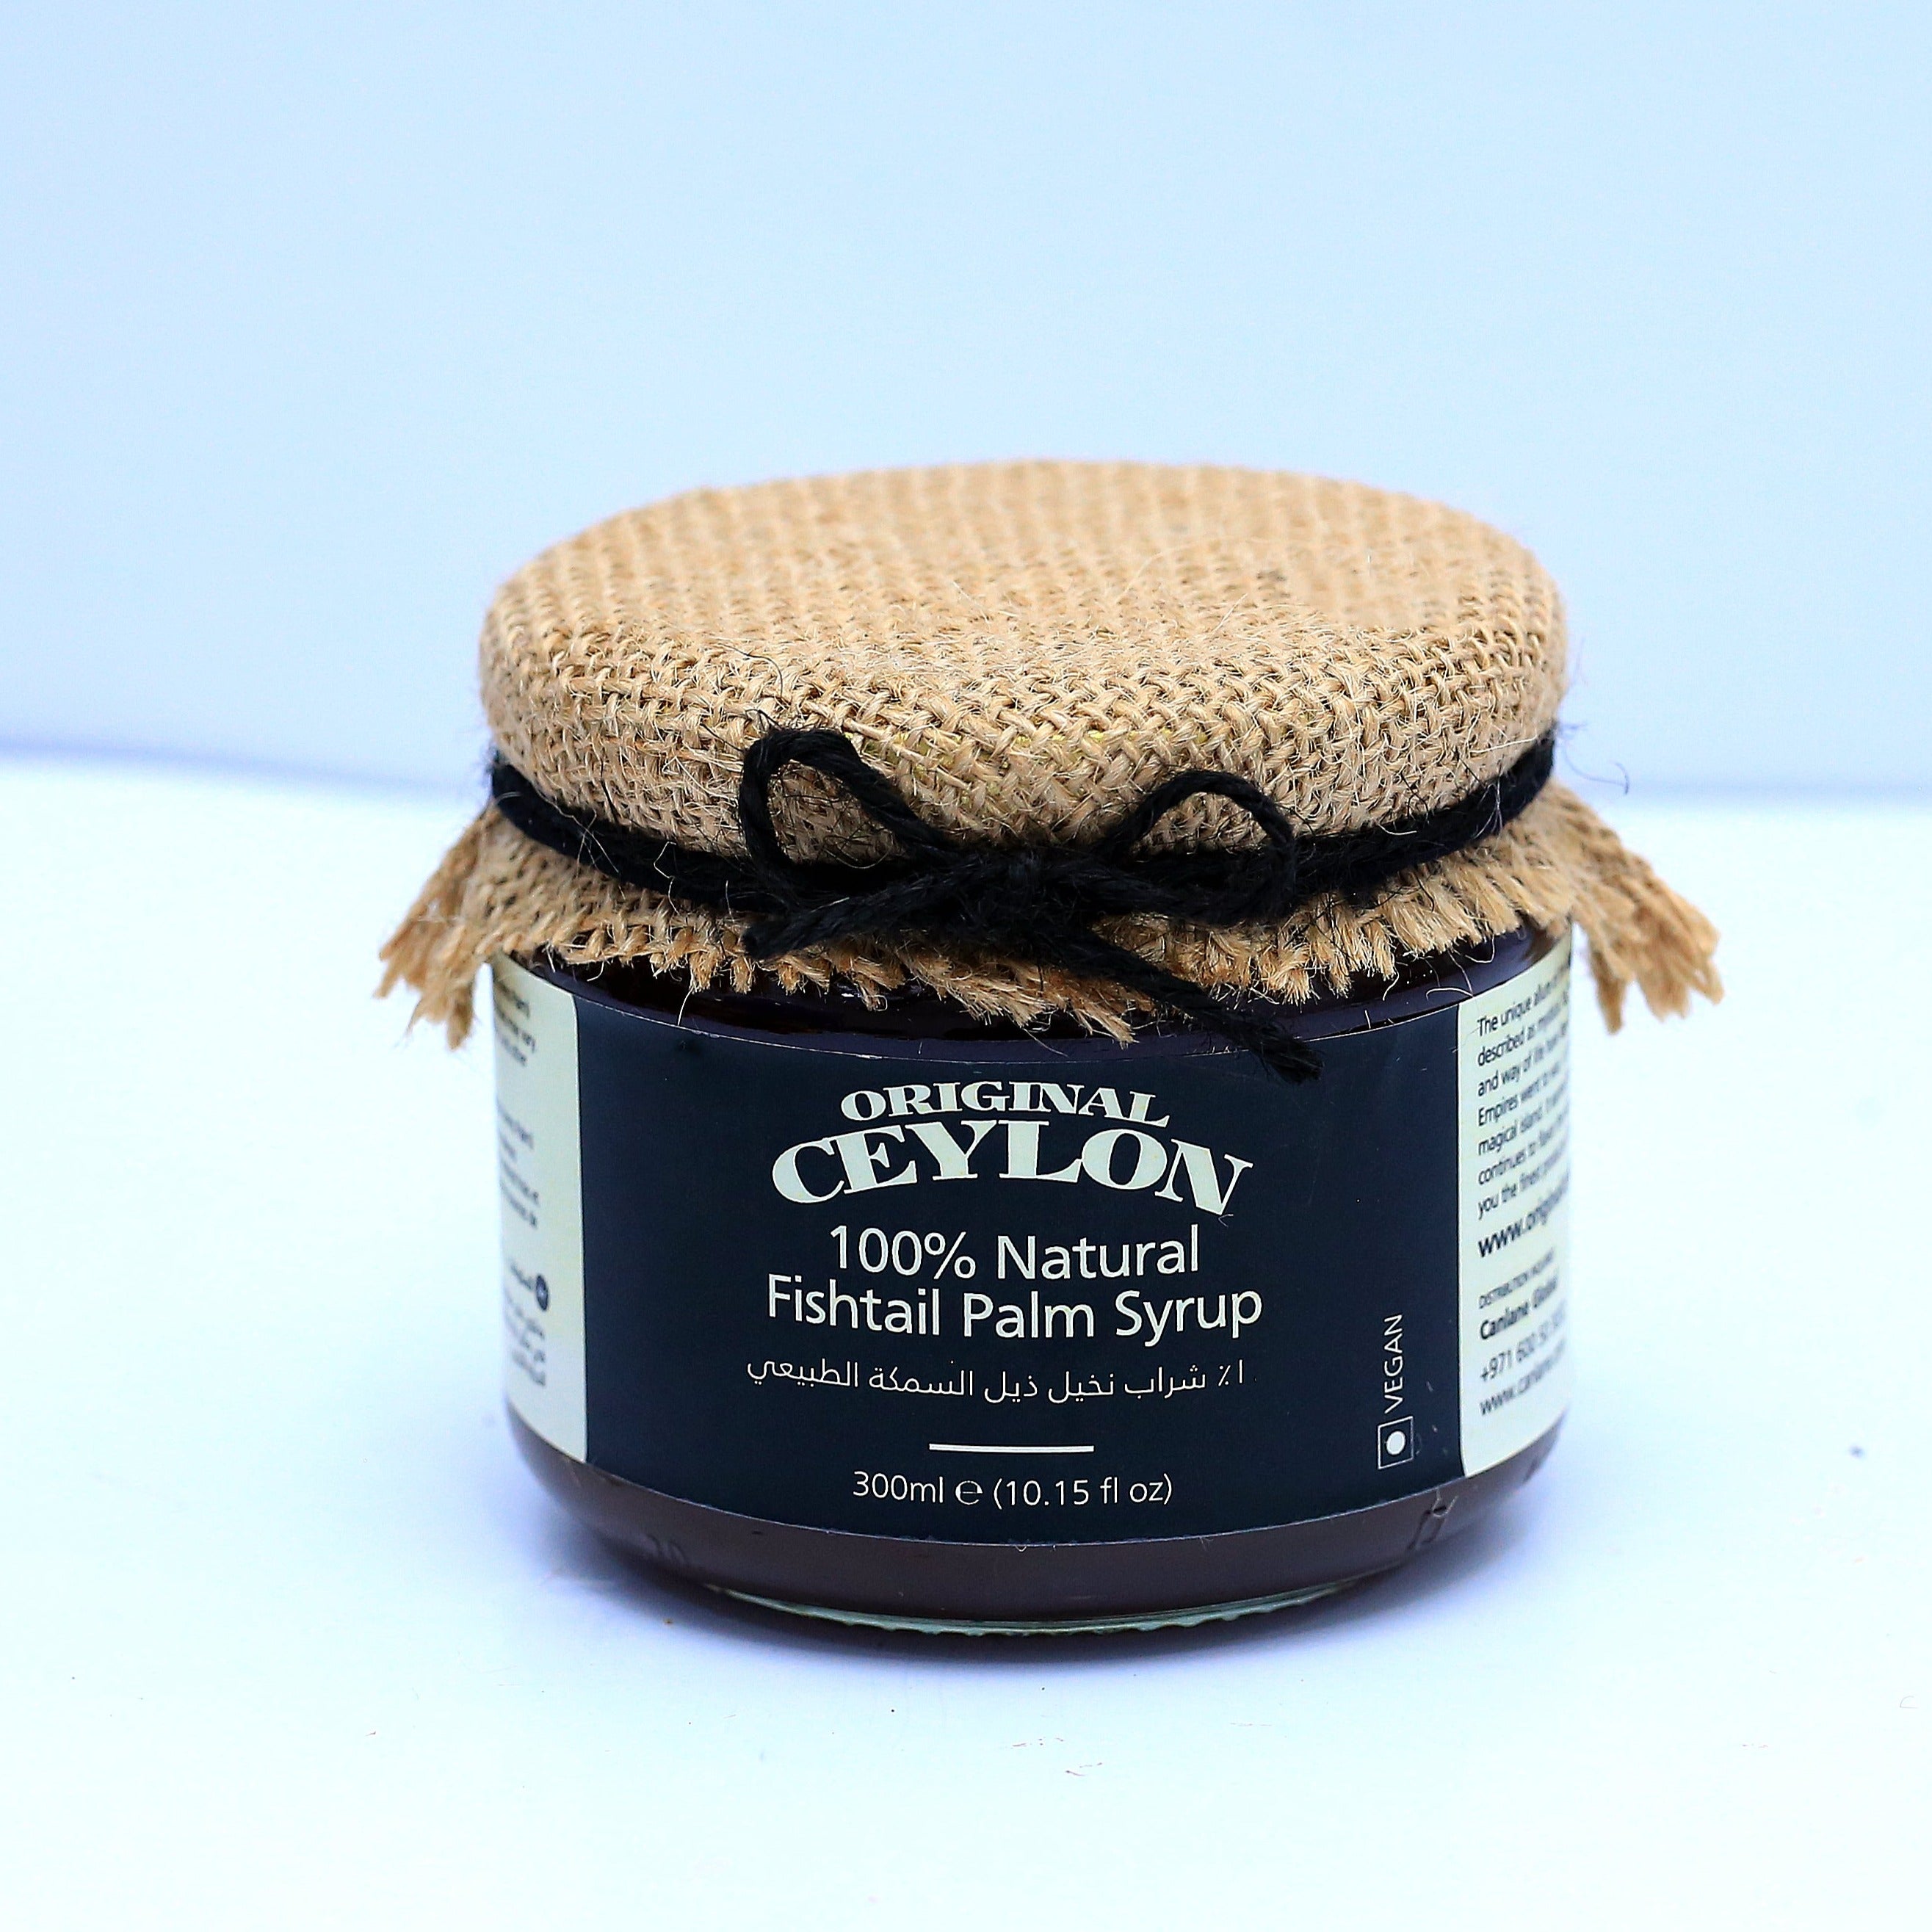 ORIGINAL CEYLON 100% Natural Kithul Fishtail Palm Syrup, 300ml